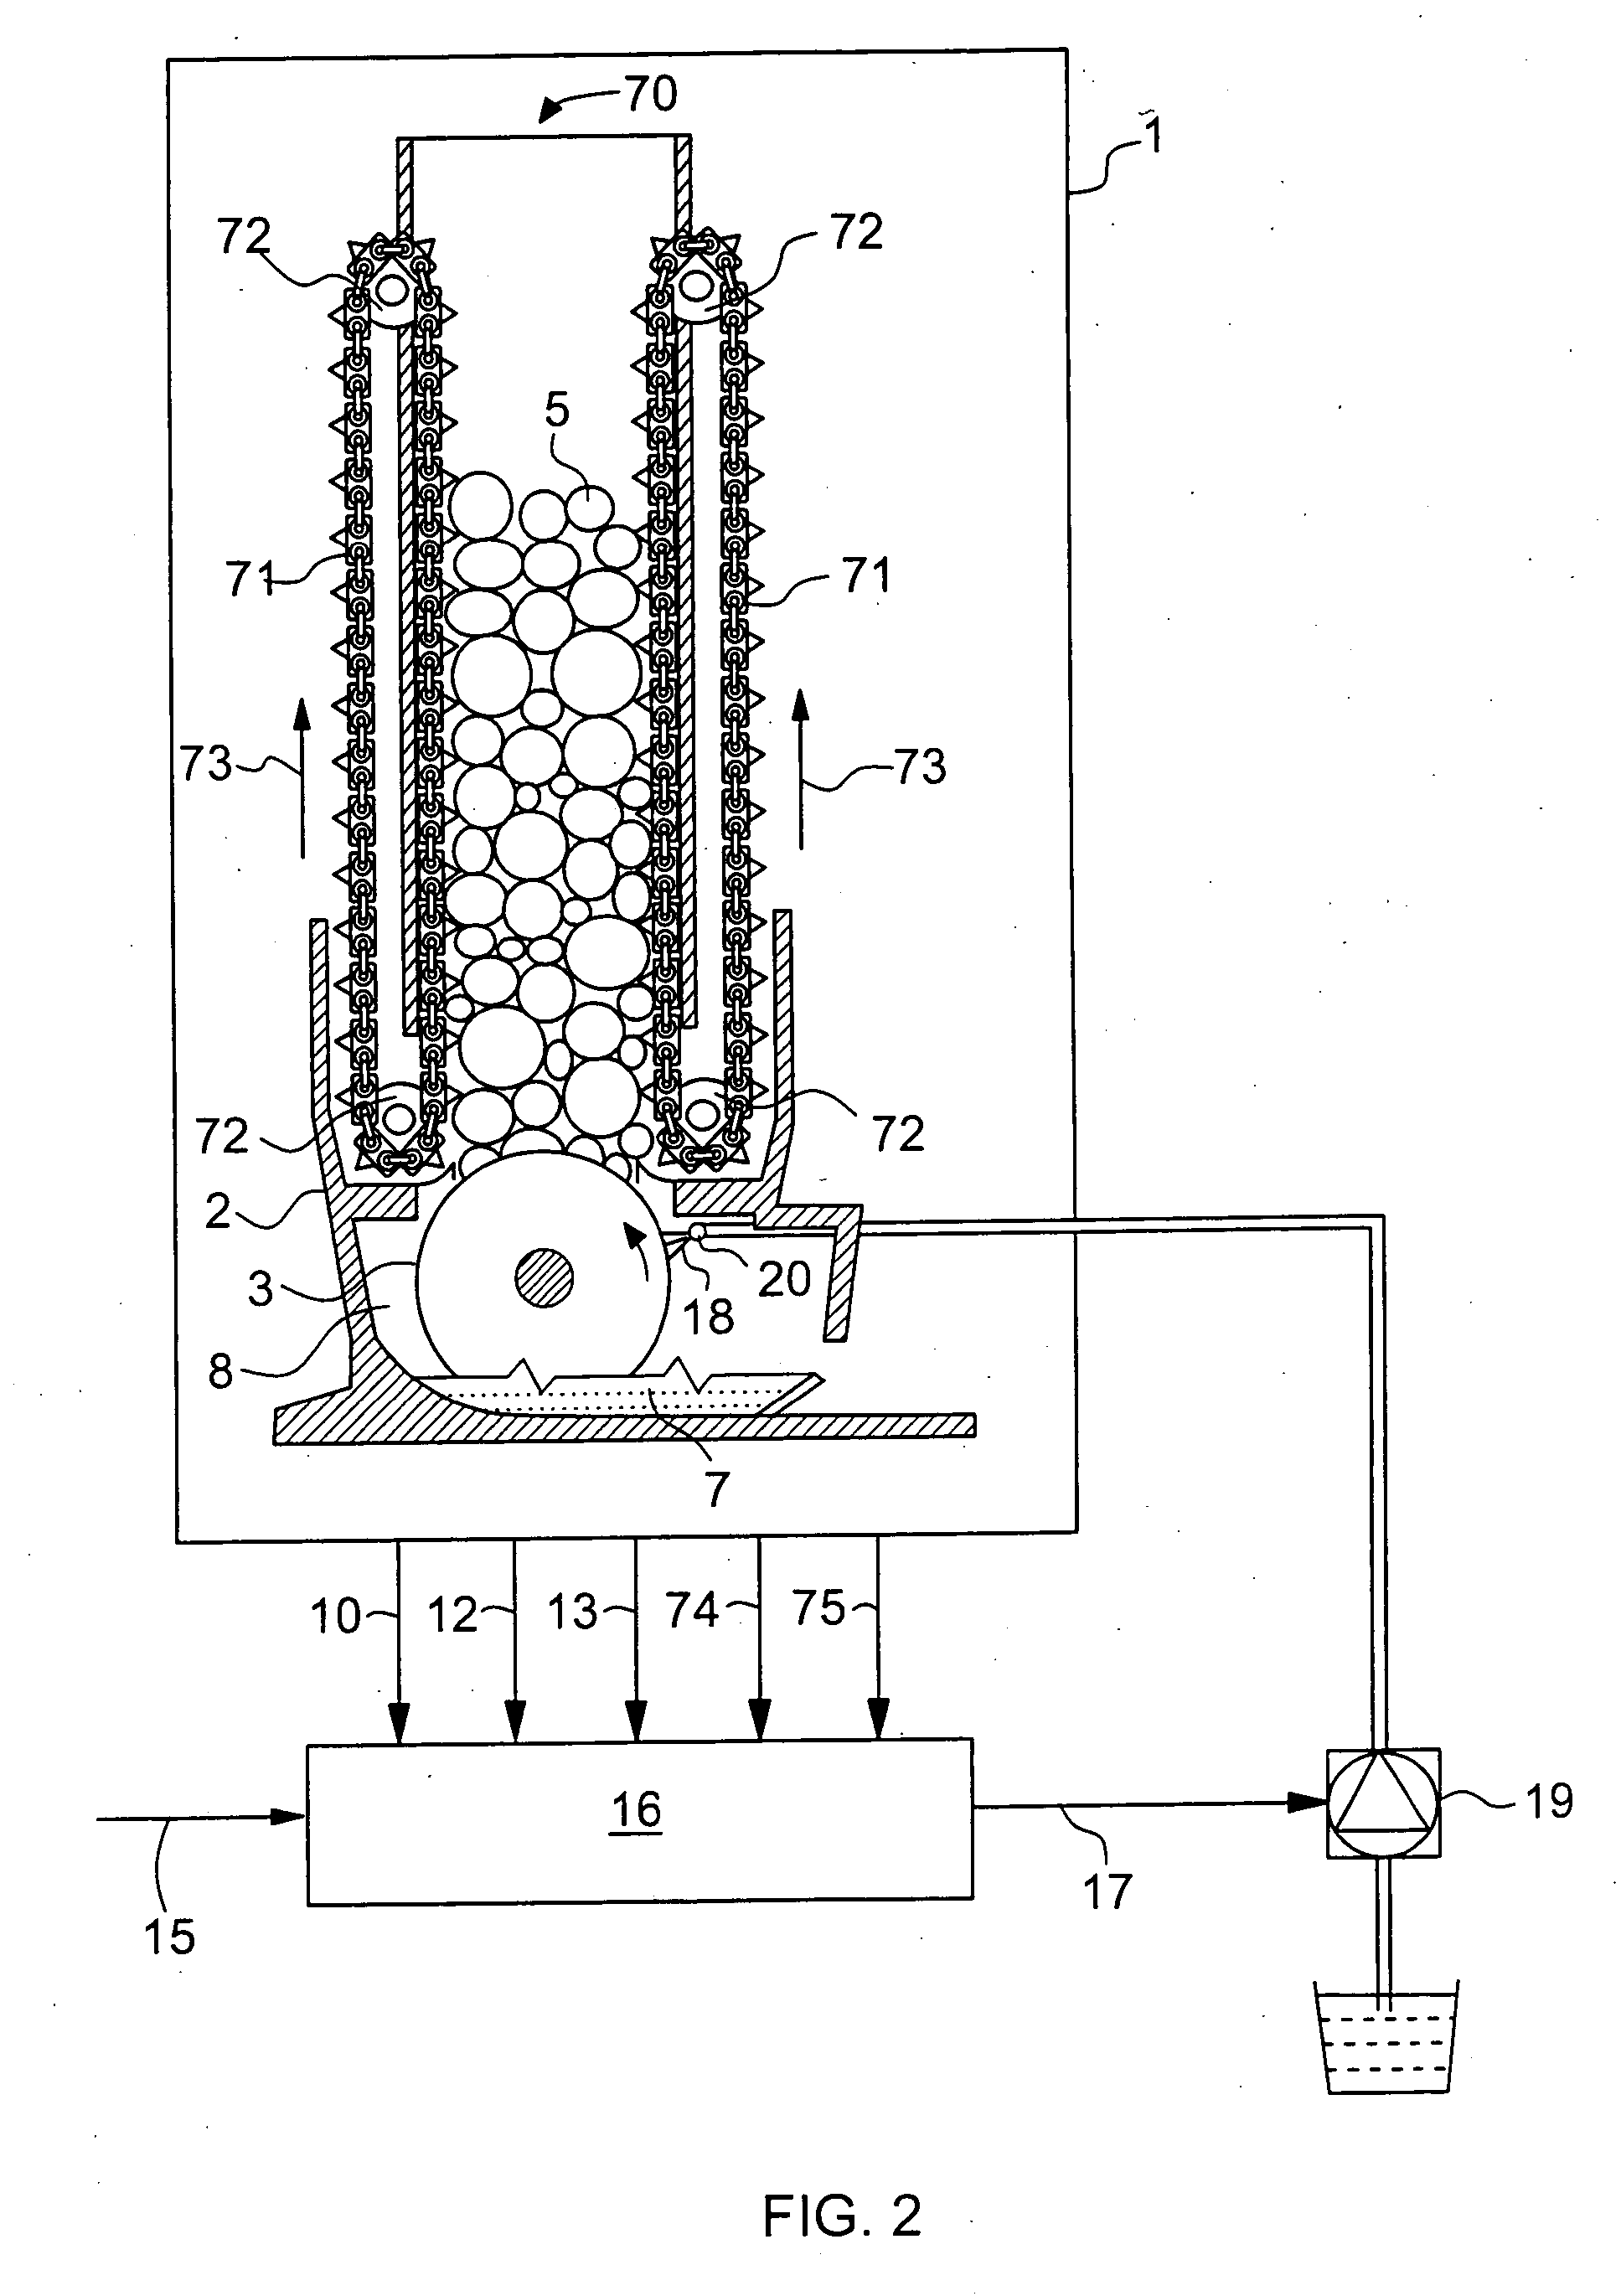 Arrangement for treating pulpstone surface